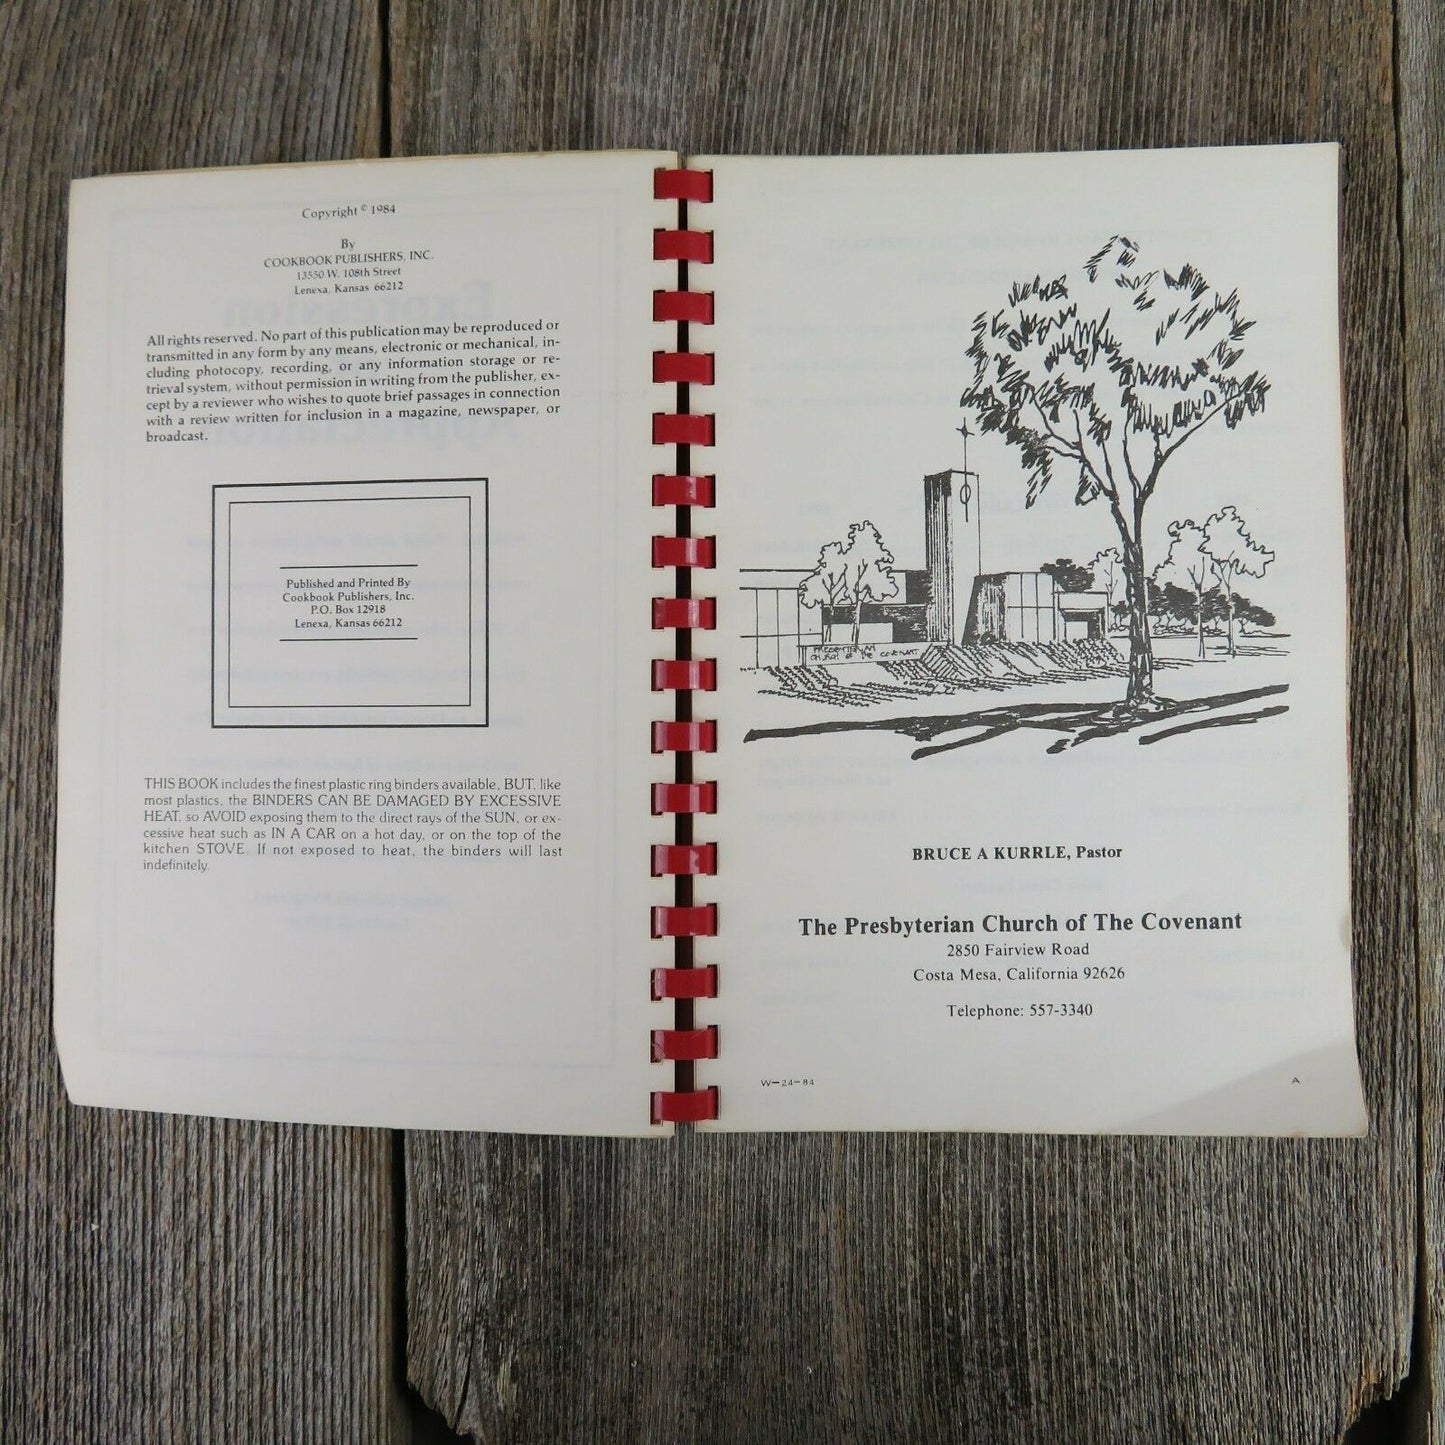 Vintage California Cookbook  Costa Mesa Presbyterian Church of the Covenant Vtg - At Grandma's Table